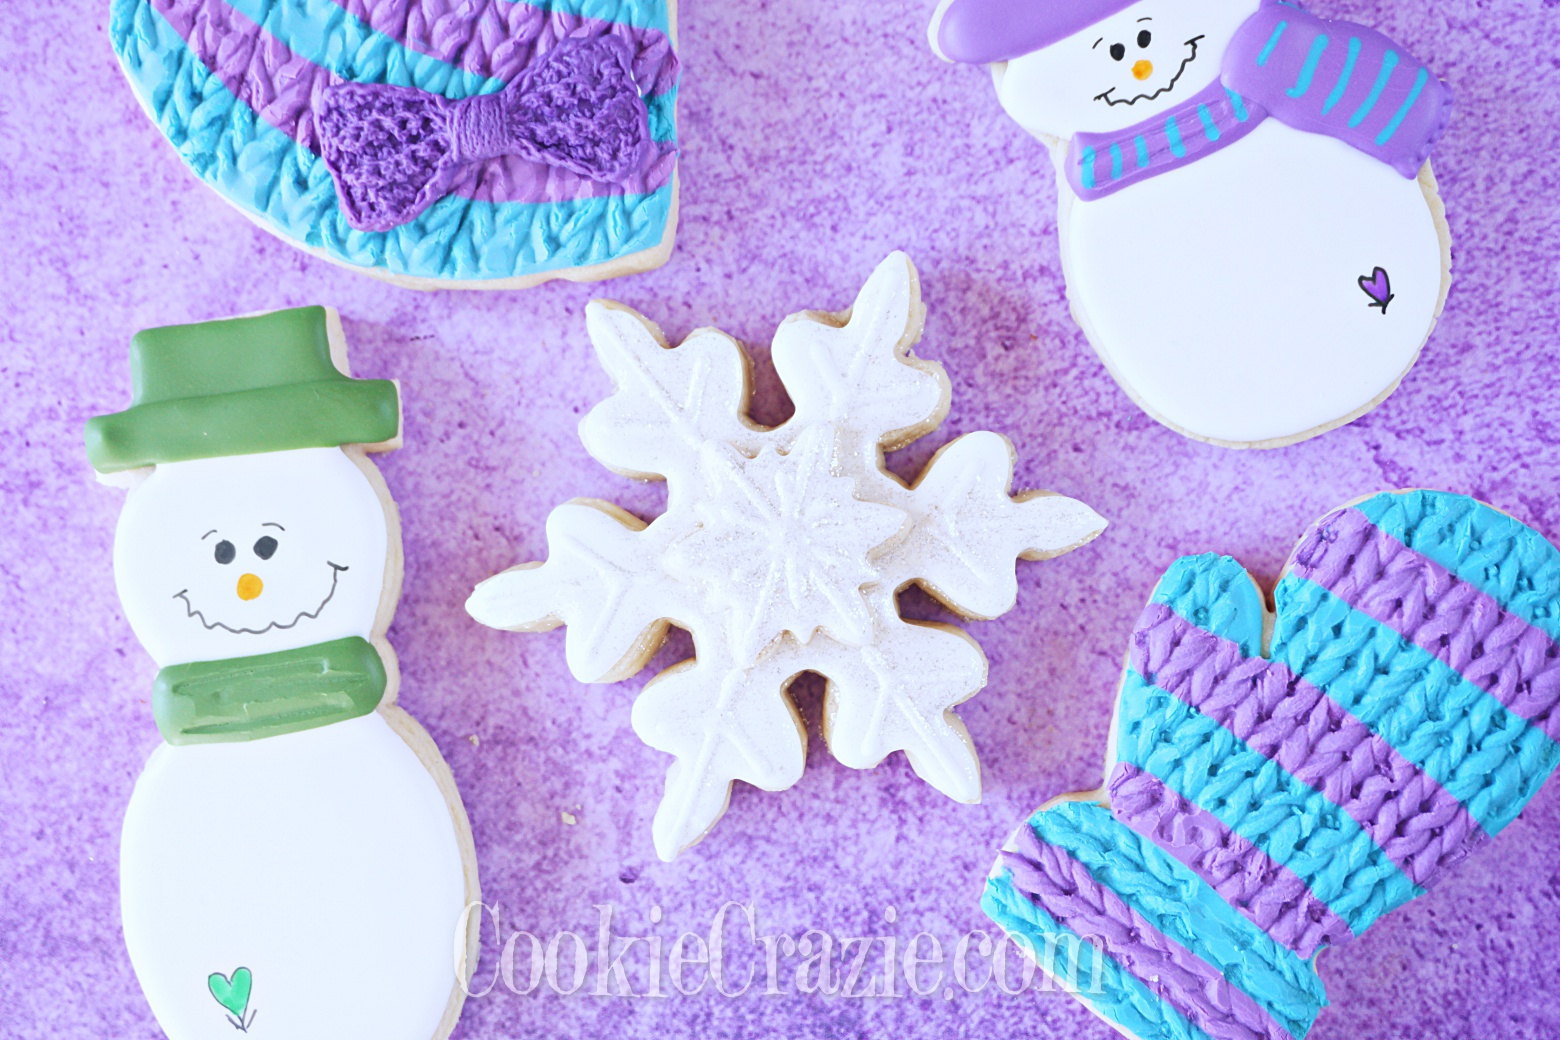  Snowflake Decorated Sugar Cookies YouTube video  HERE  